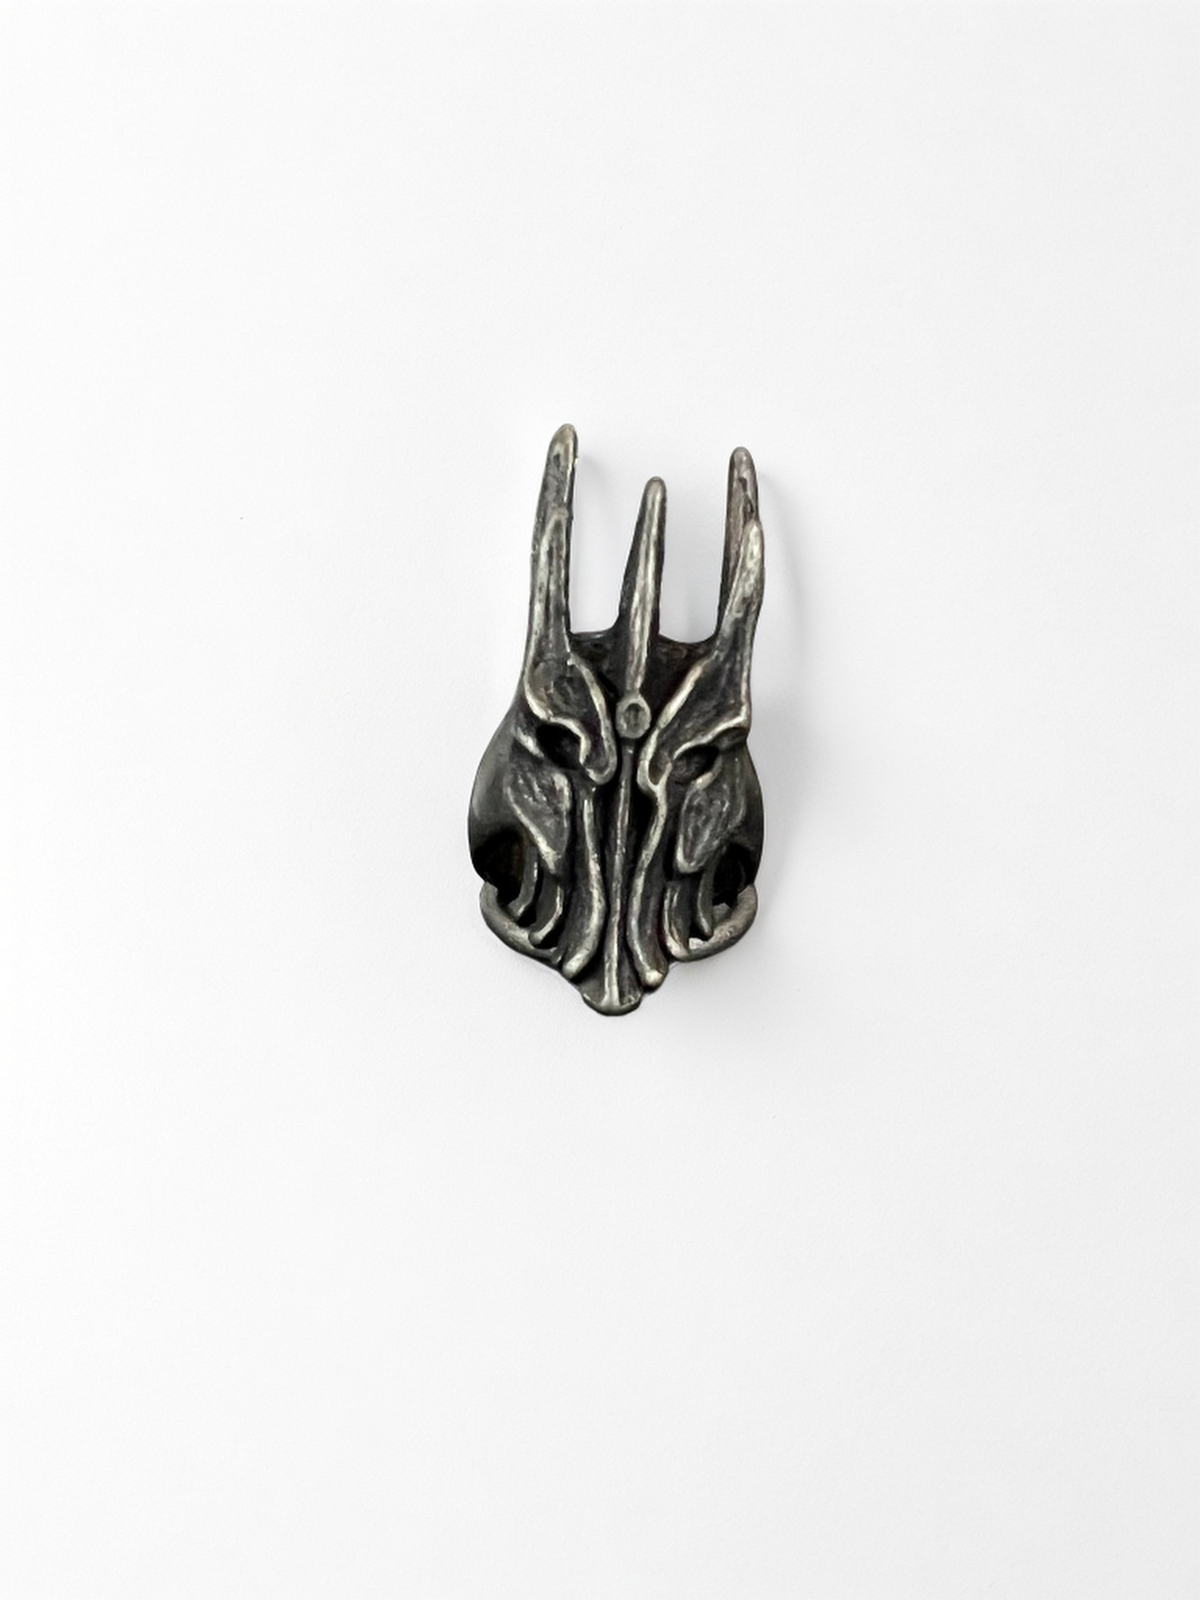 "Sauron" Evil Knight Ring-Fashion Rings-StylinArts